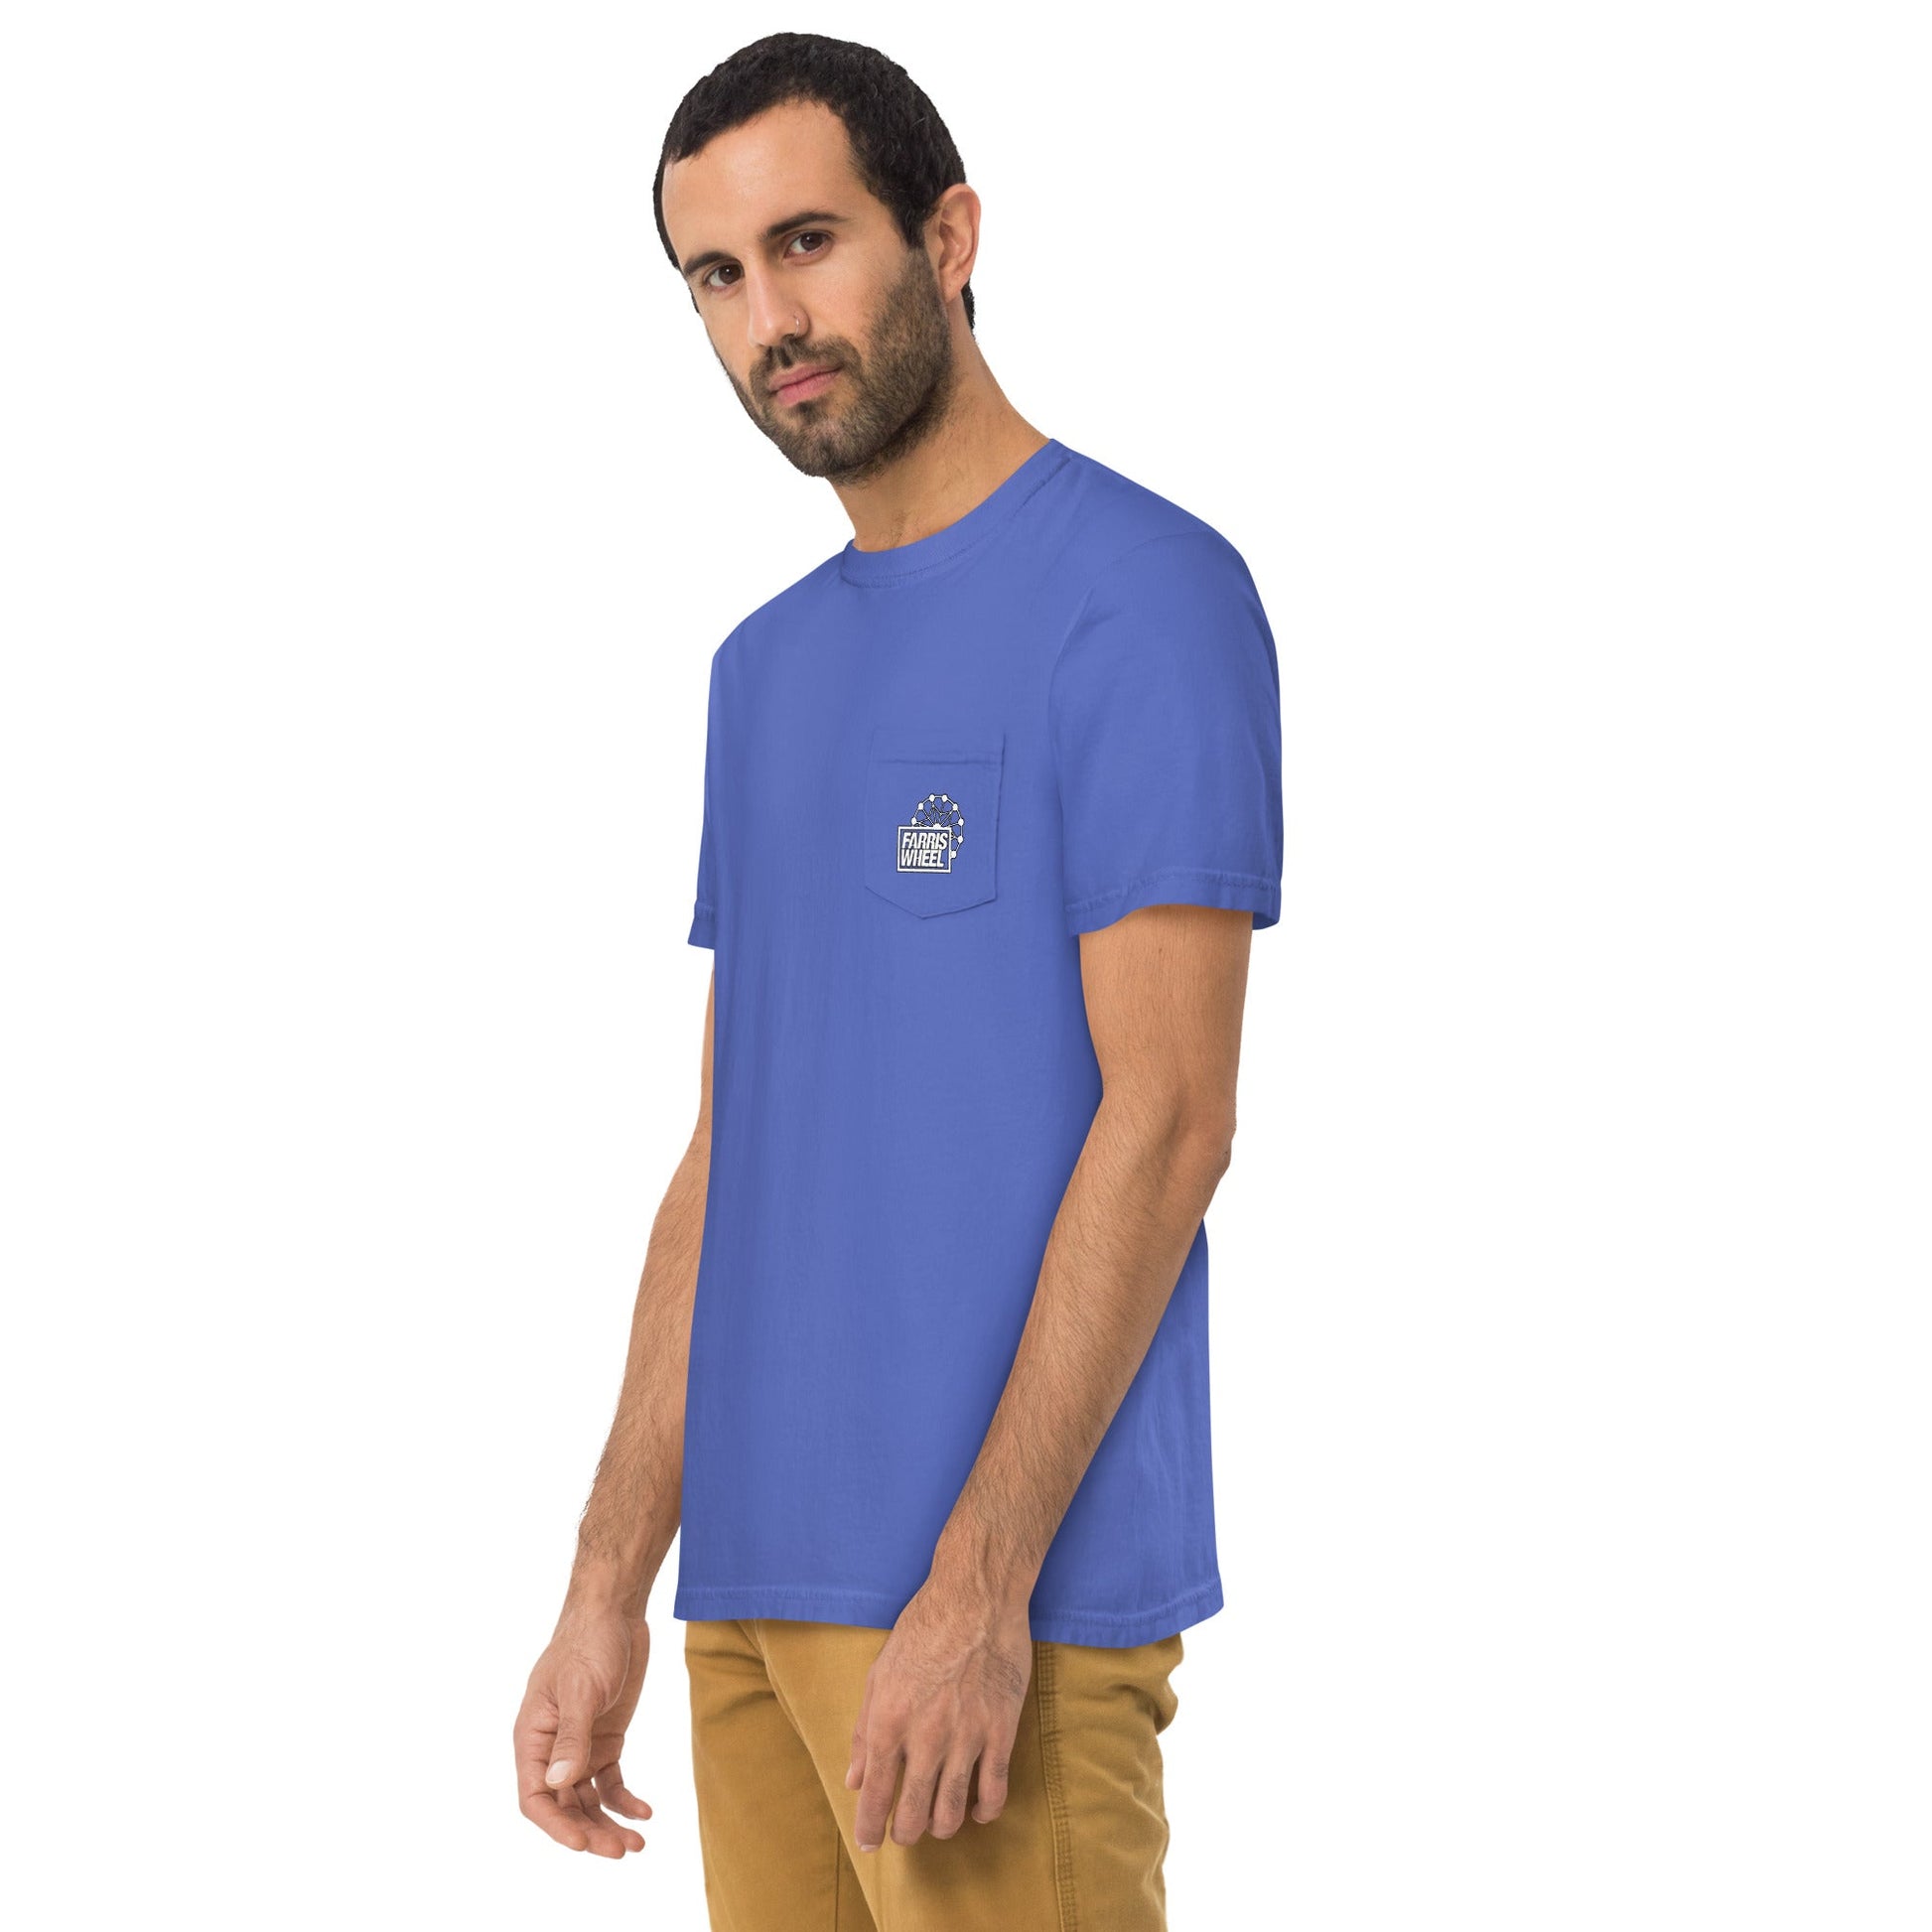 Farris Wheel Unisex Pocket T-shirt - BeExtra! Apparel & More